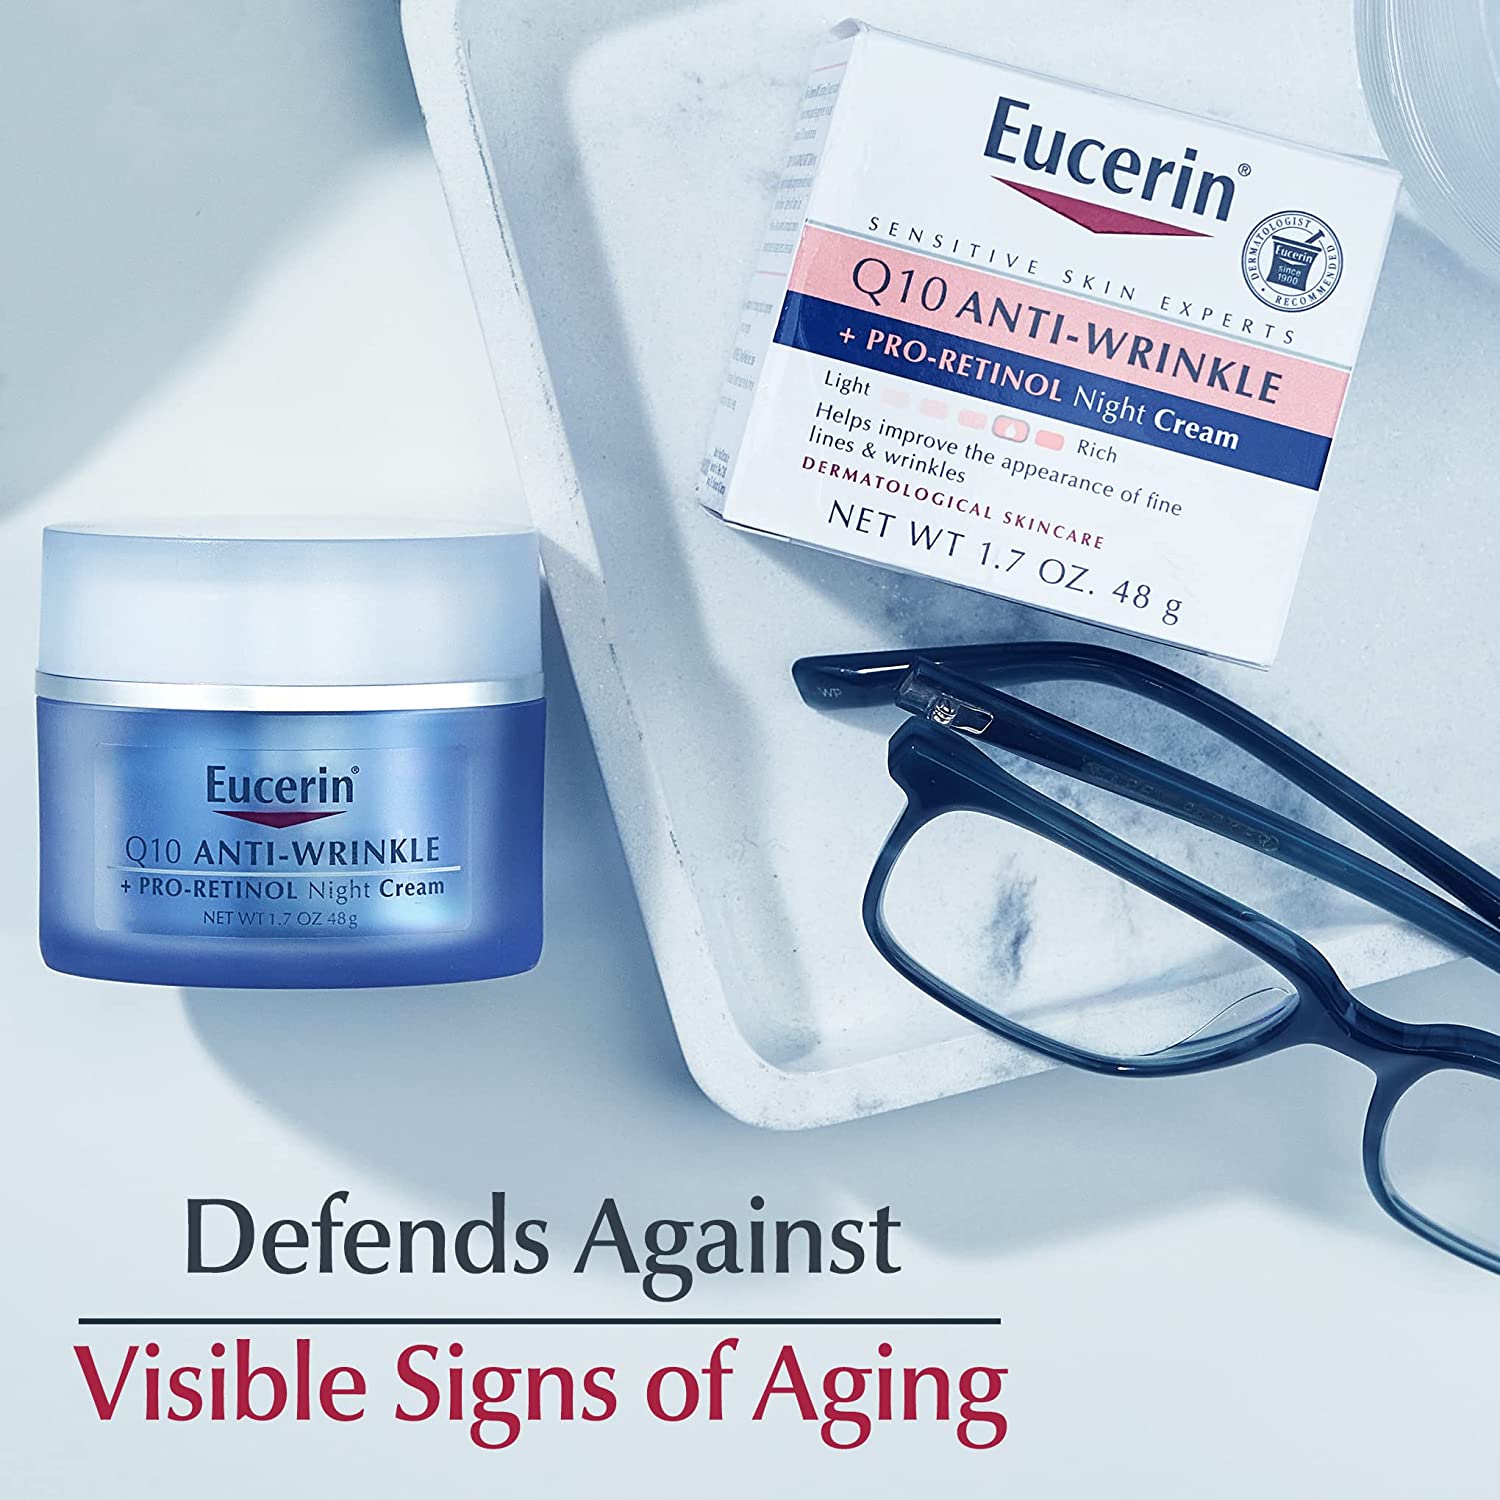 Eucerin, Q10 Anti-Wrinkle + Pro-Retinol Night Cream, 1.7 fl oz (48 g)